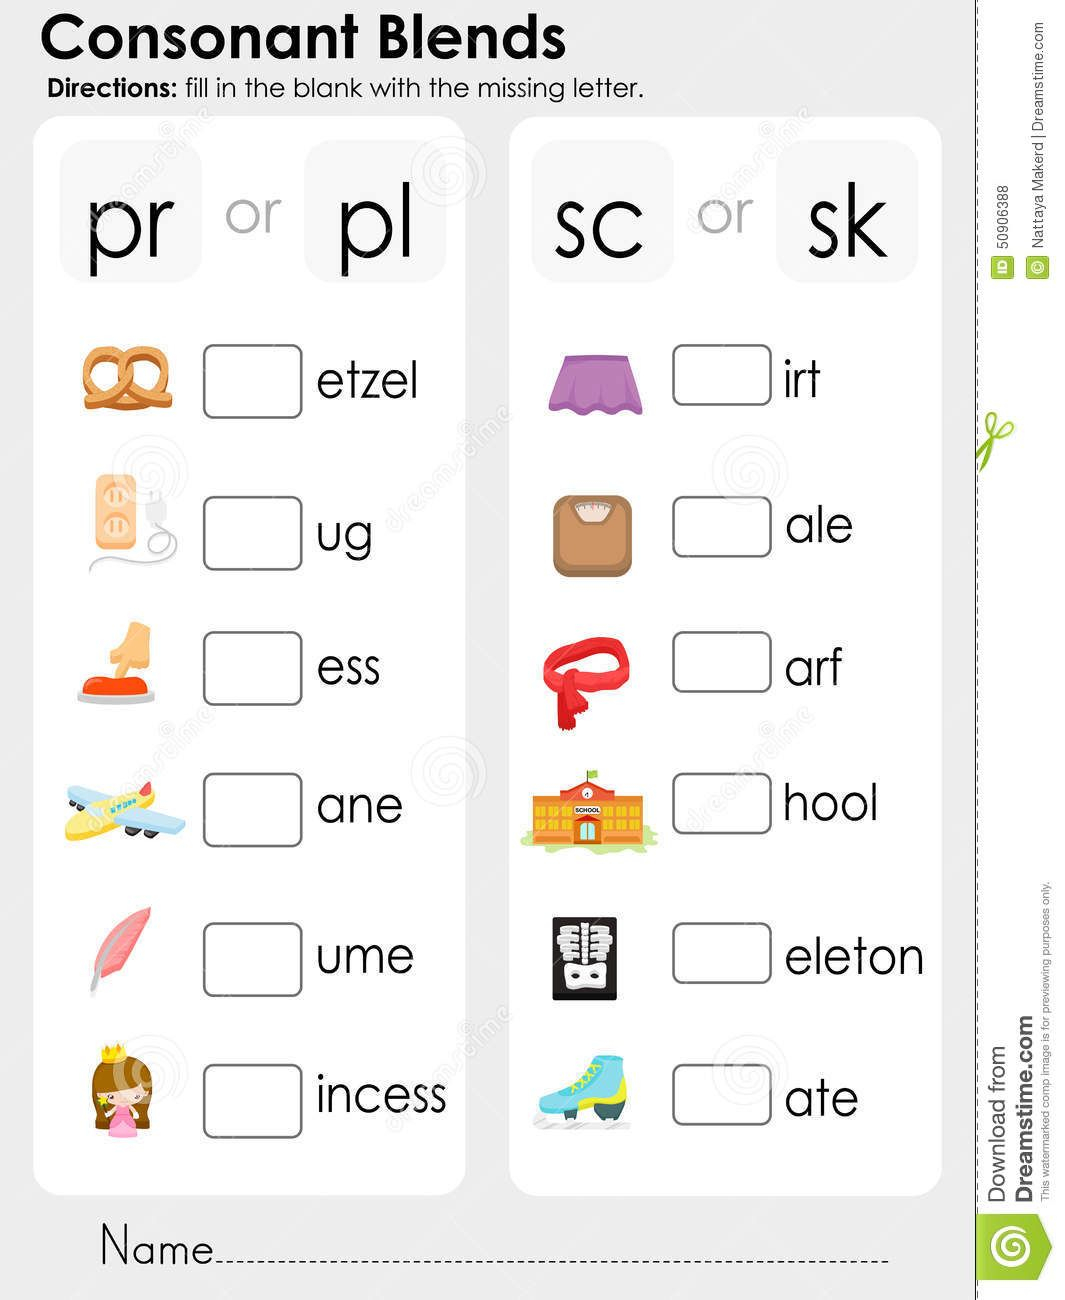 Consonant Blends Missing Letter Worksheet For Education inside Alphabet Blends Worksheets